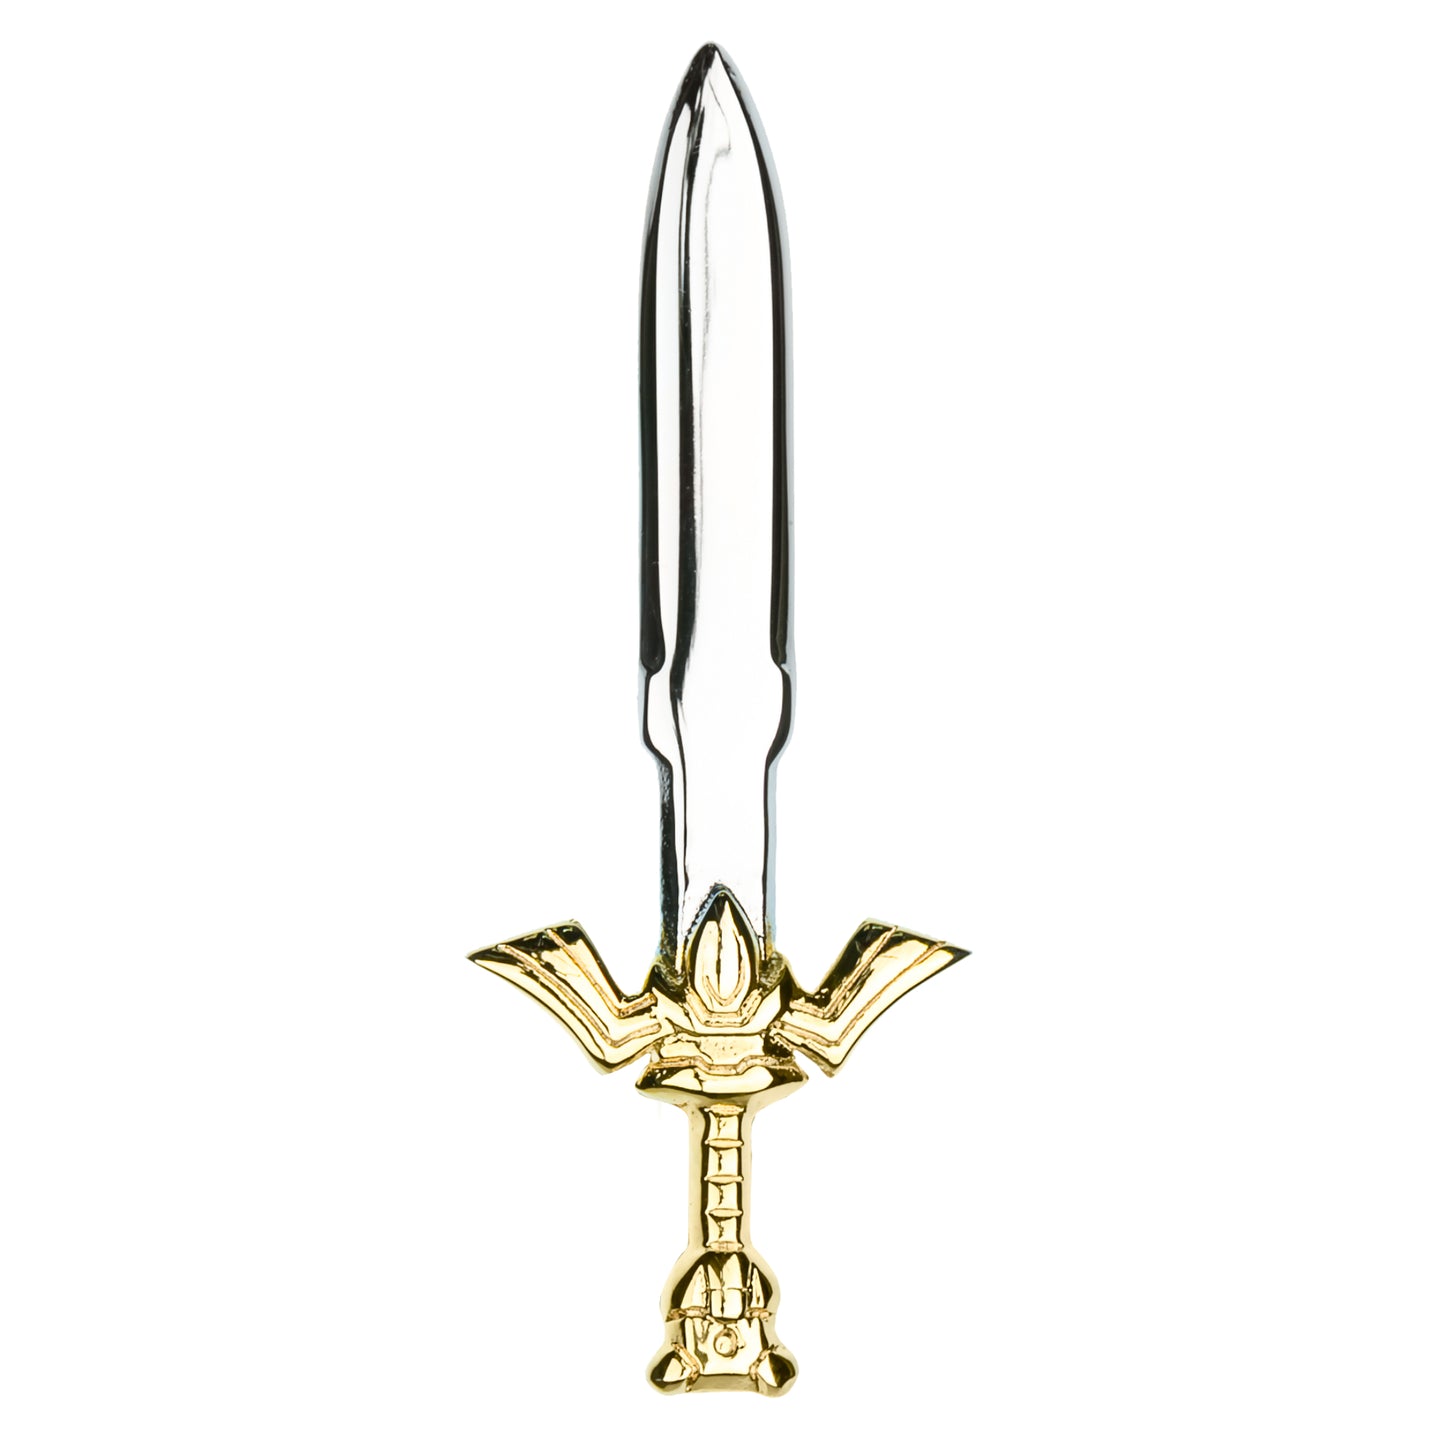 The Hero's Sword (Tie Clip)